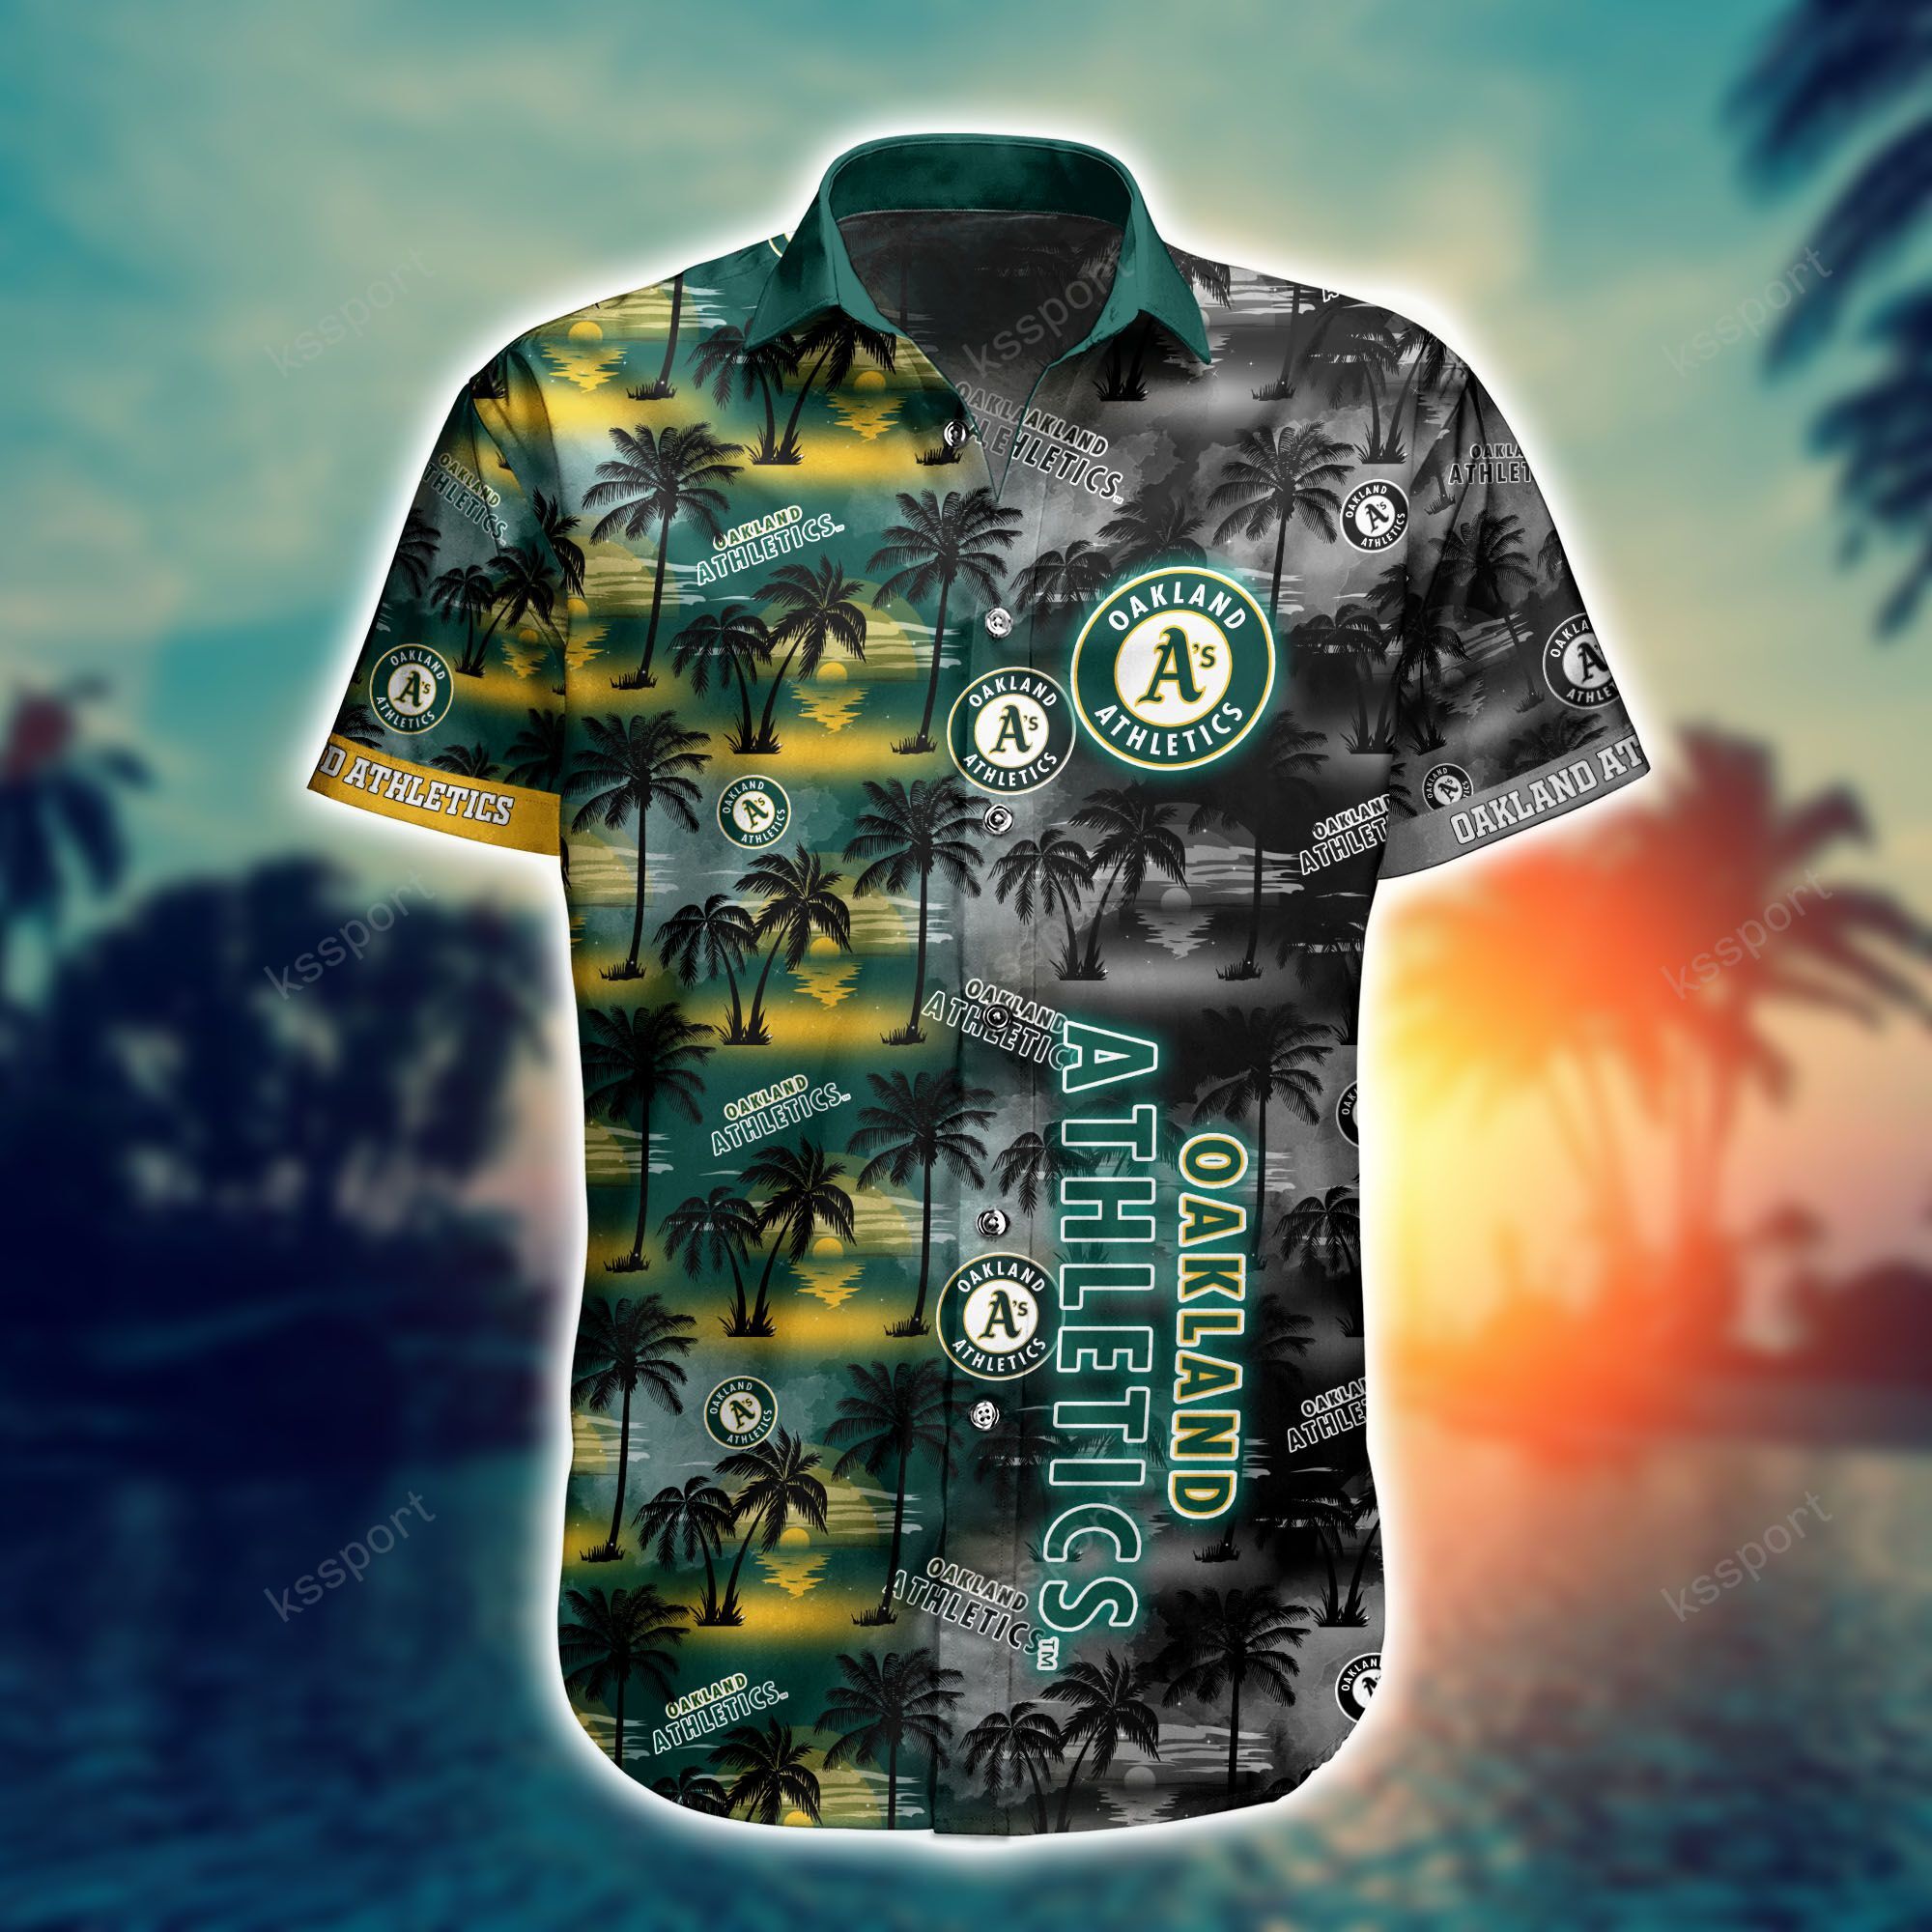 Hawaiian shirt and shorts is a great way to look stylish at a beach party 149